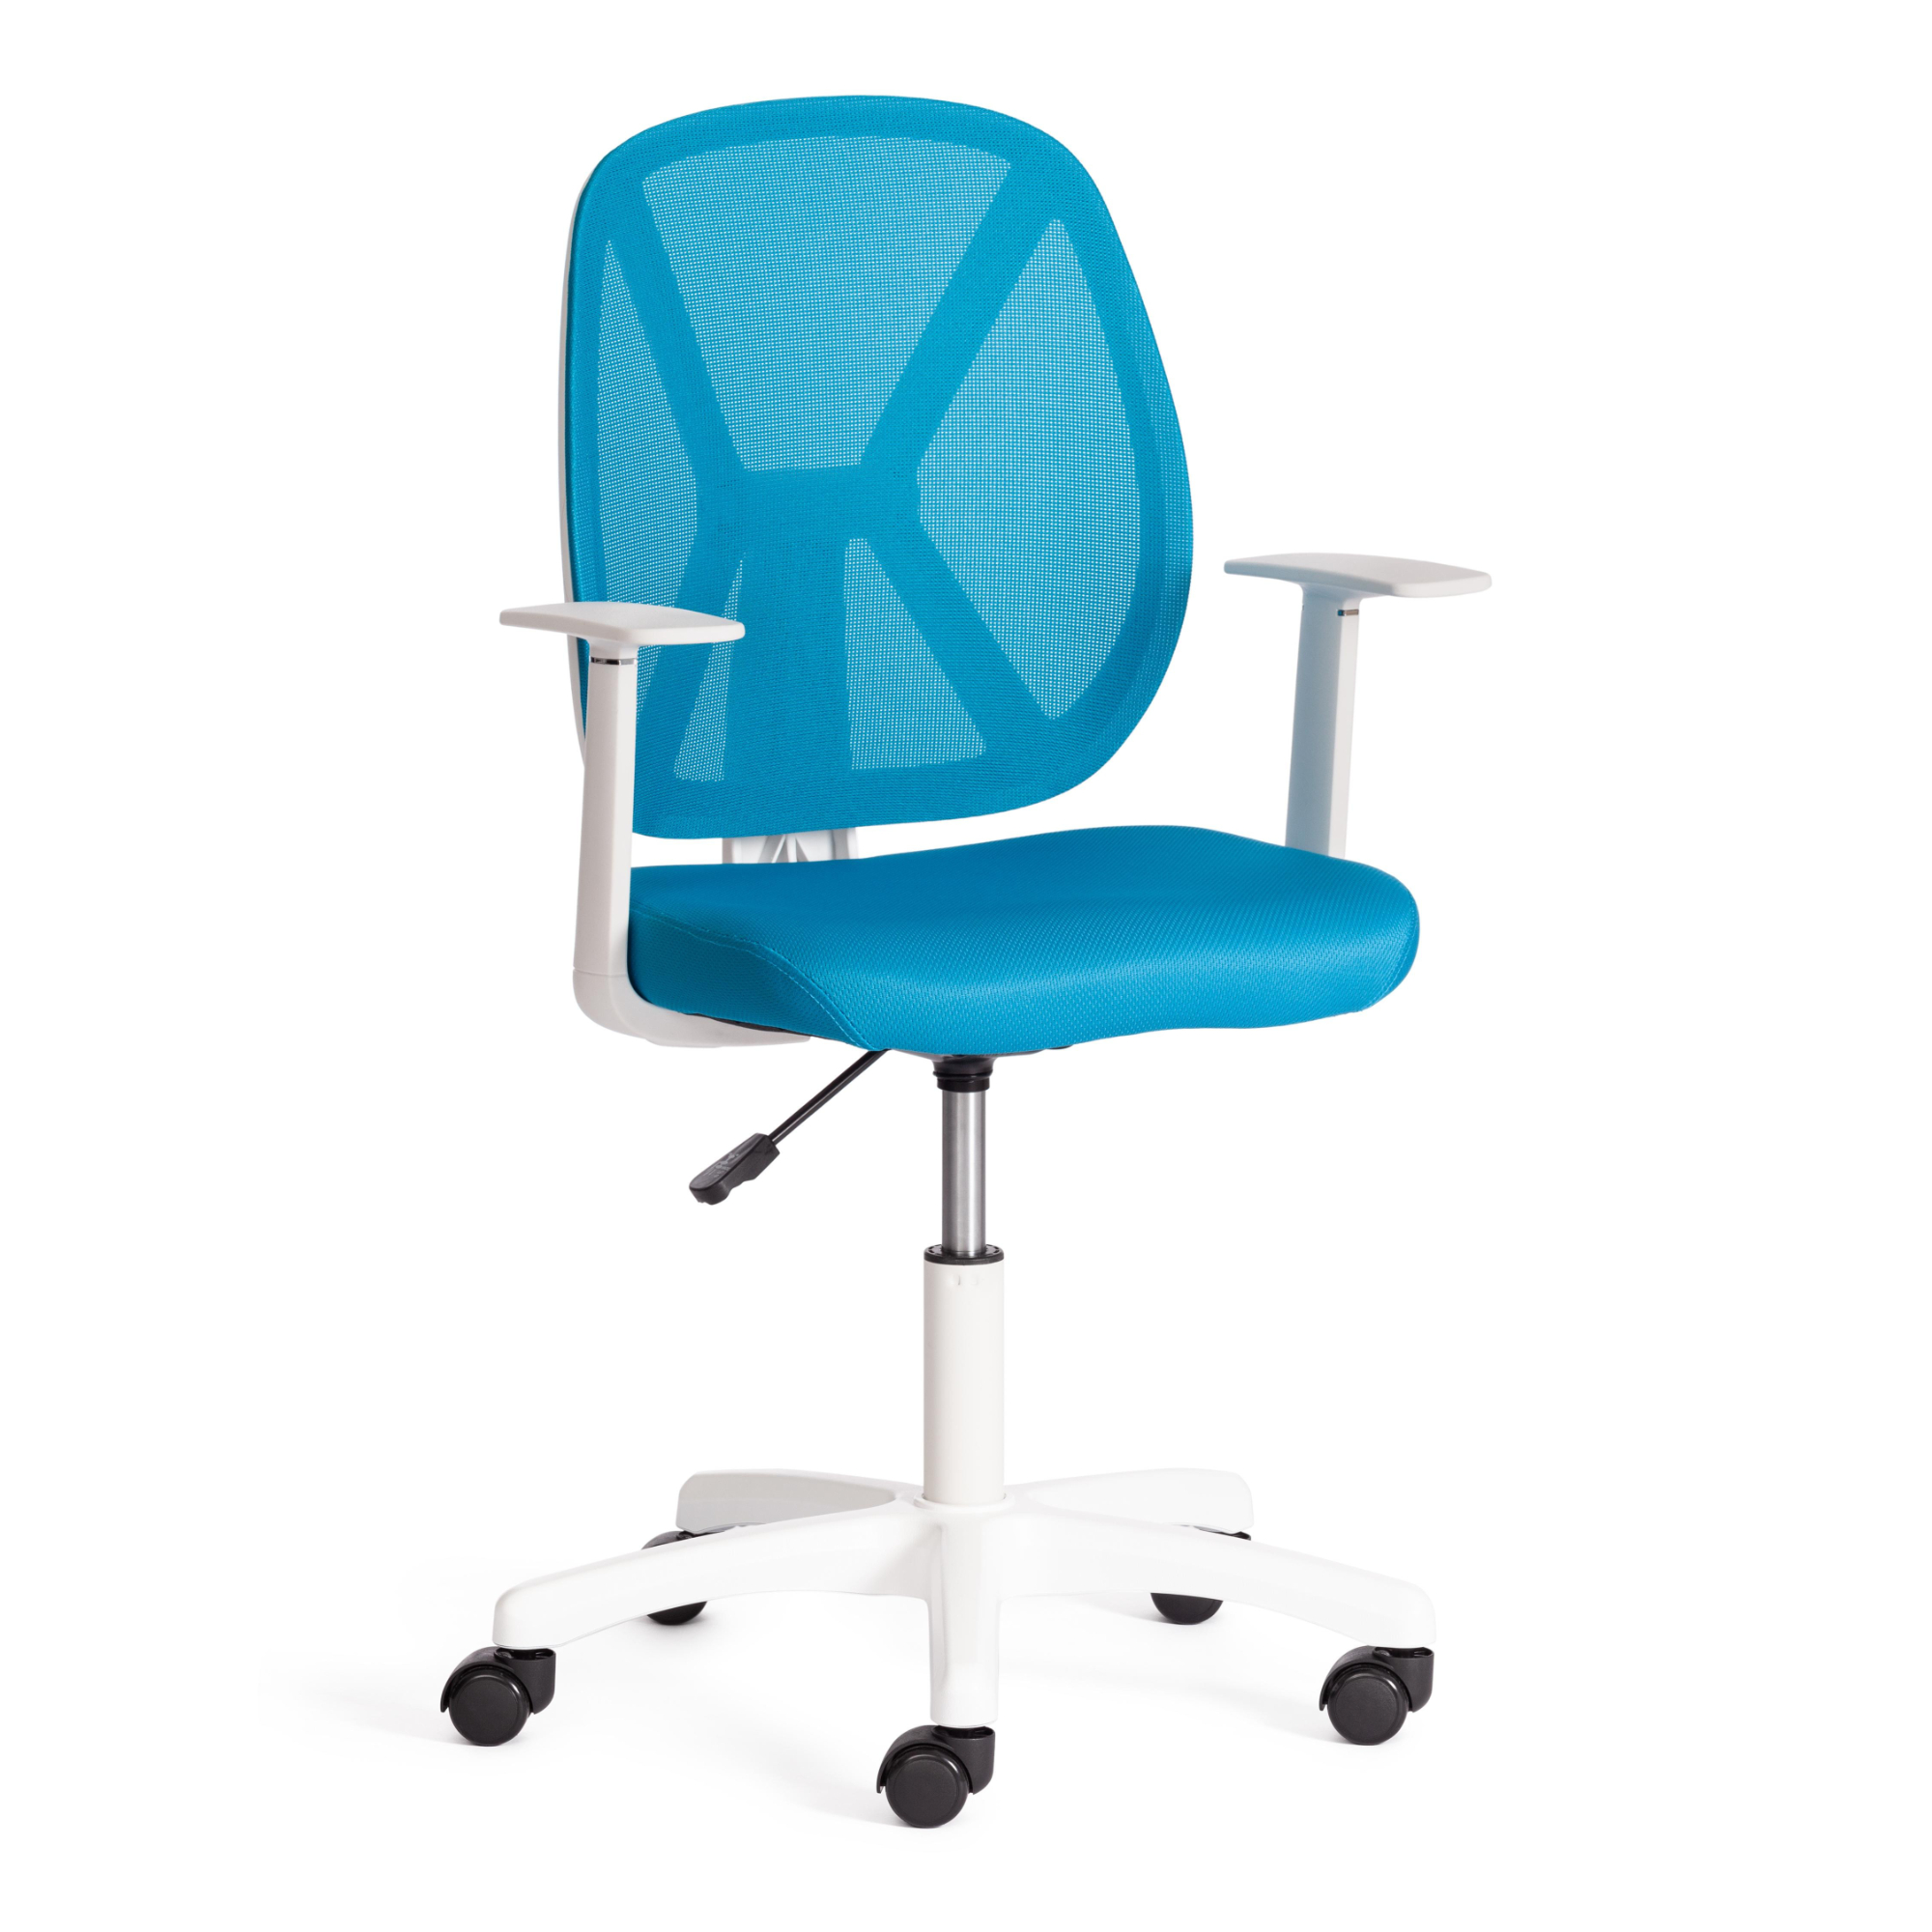 Кресло ТС Blue синее (20210) кресло тс blue синее 20210